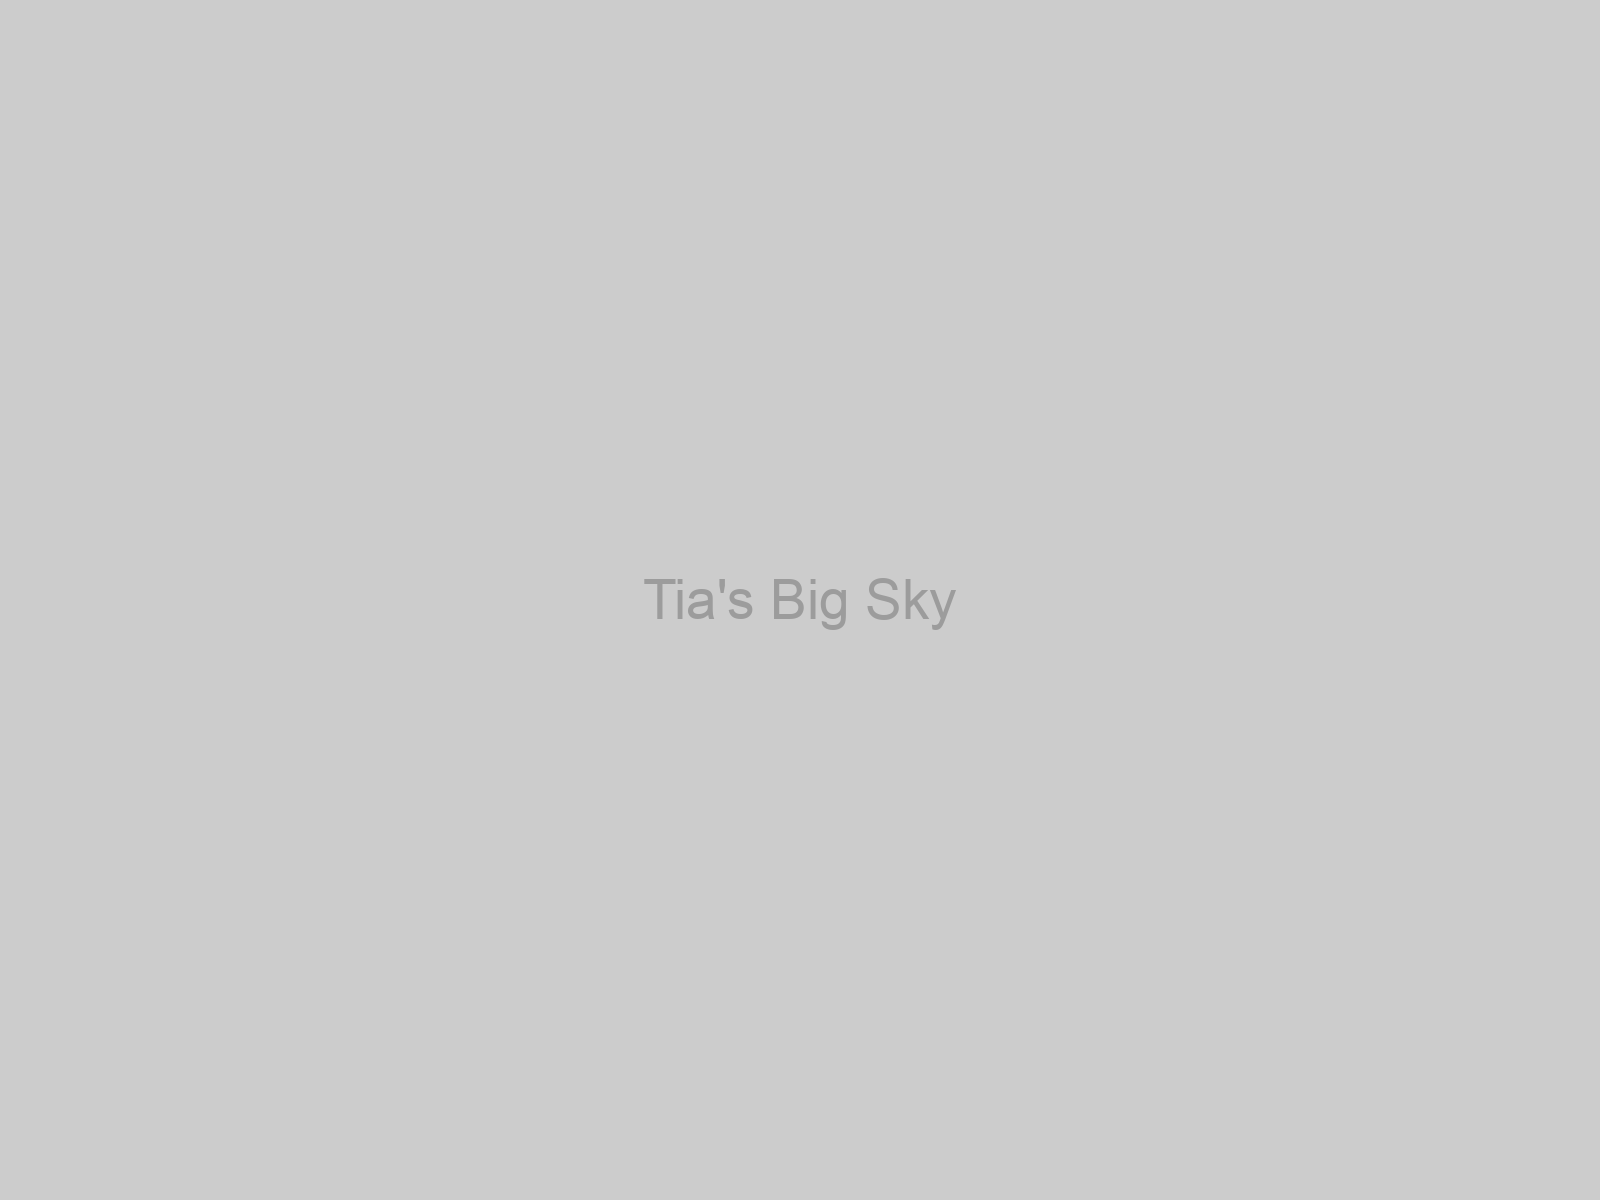 Tia's Big Sky